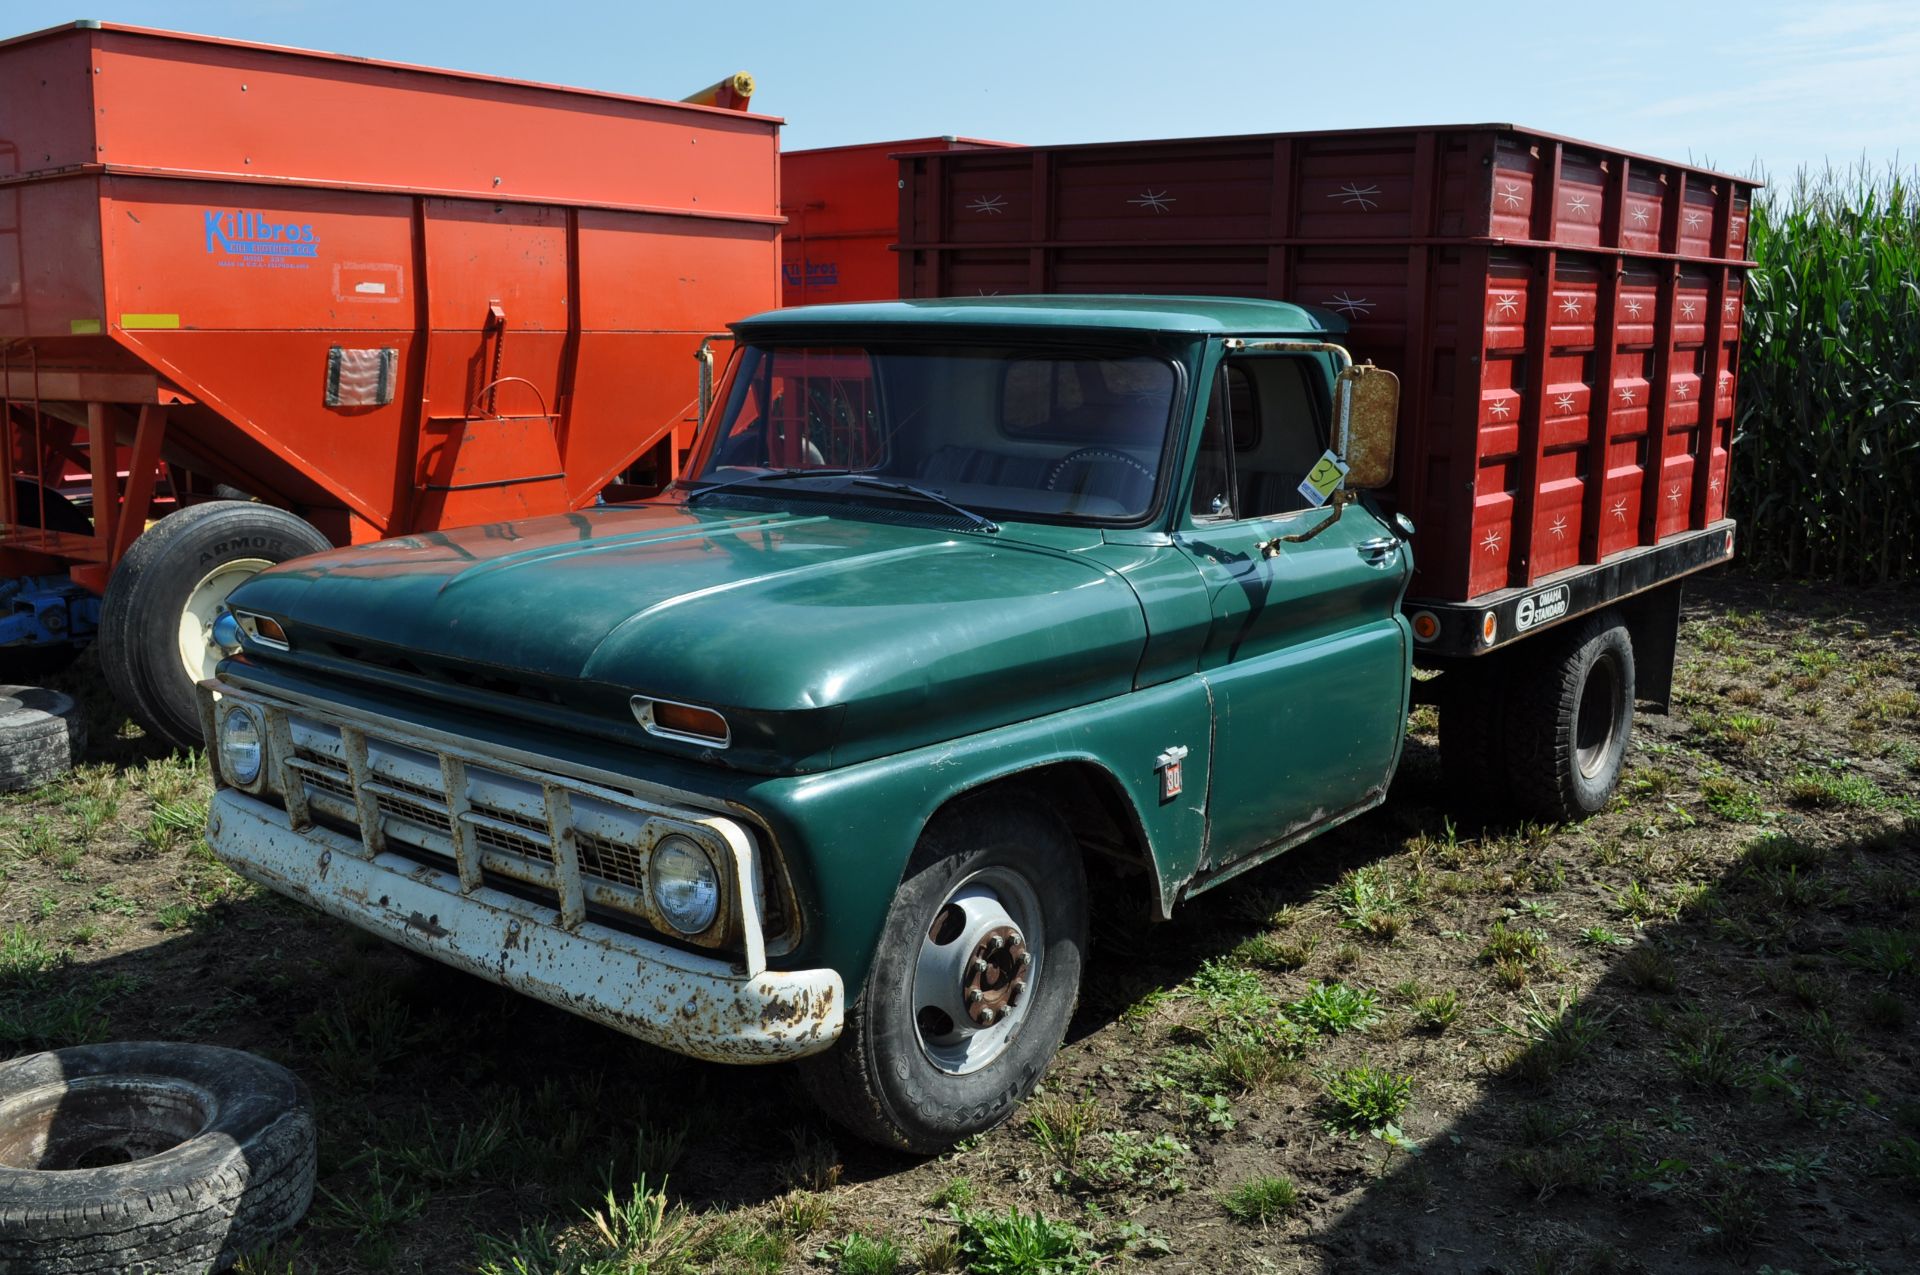 1964 Chevrolet 30 1 ton truck, 230 6 cyl gas engine, 4 spd manual trans, 134” WB, 235/85R16 tires